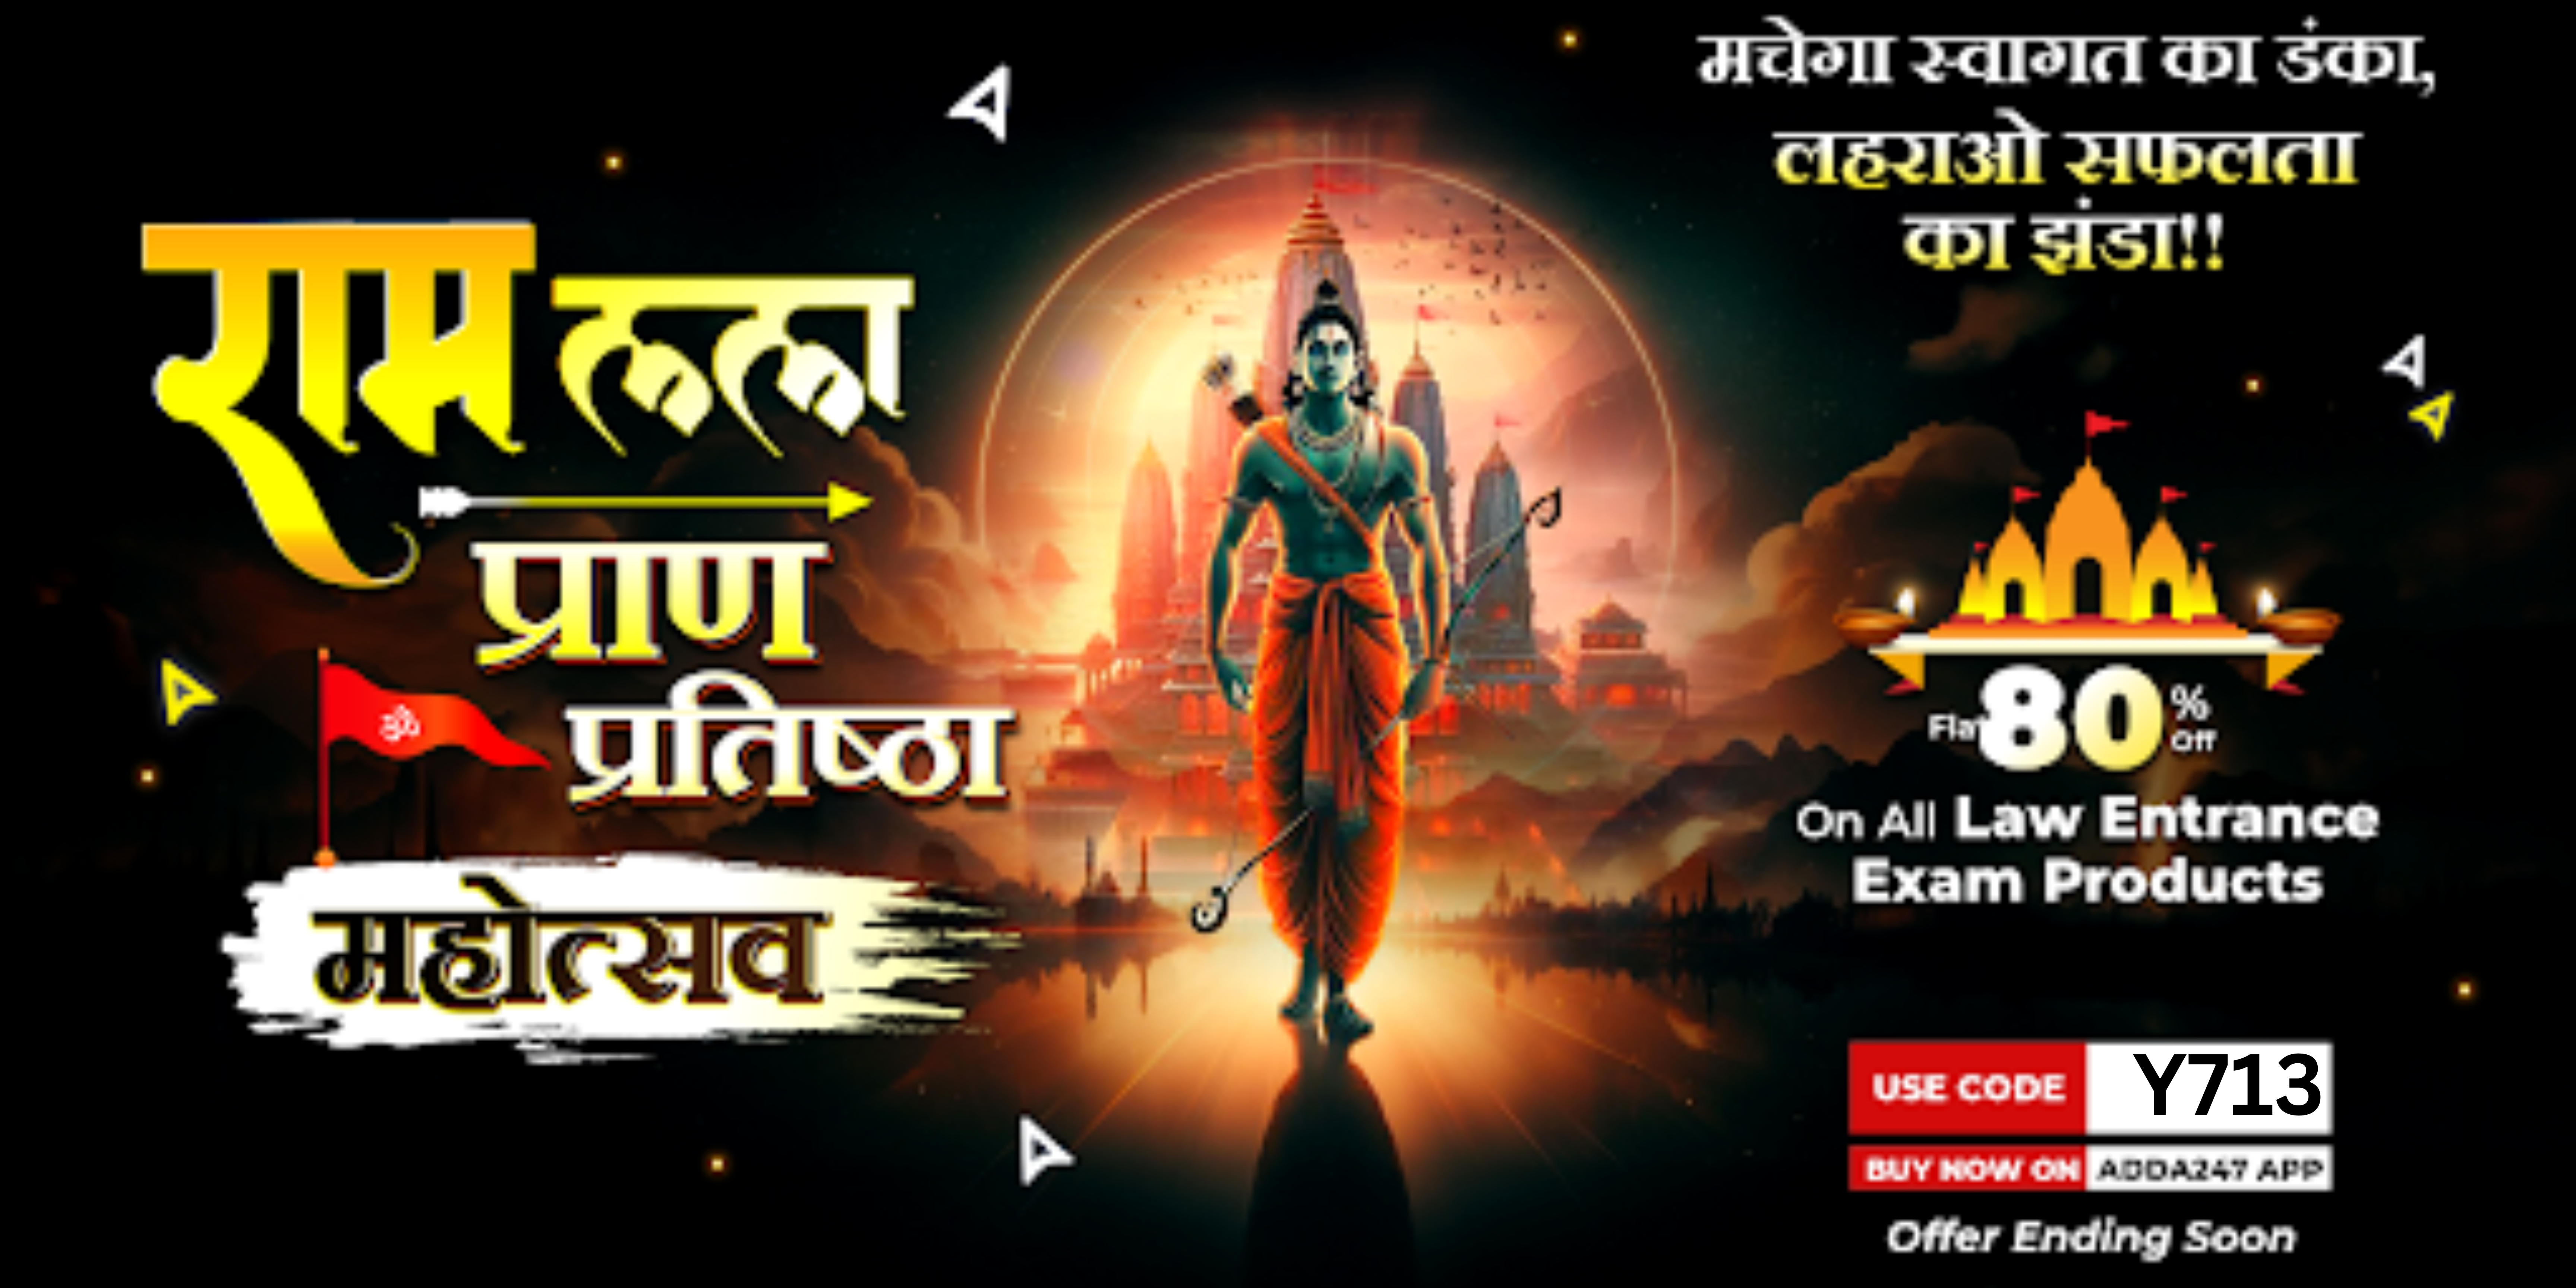 Ayodhya Ram Mandir Inauguration Event Schedule and Timings_3.1